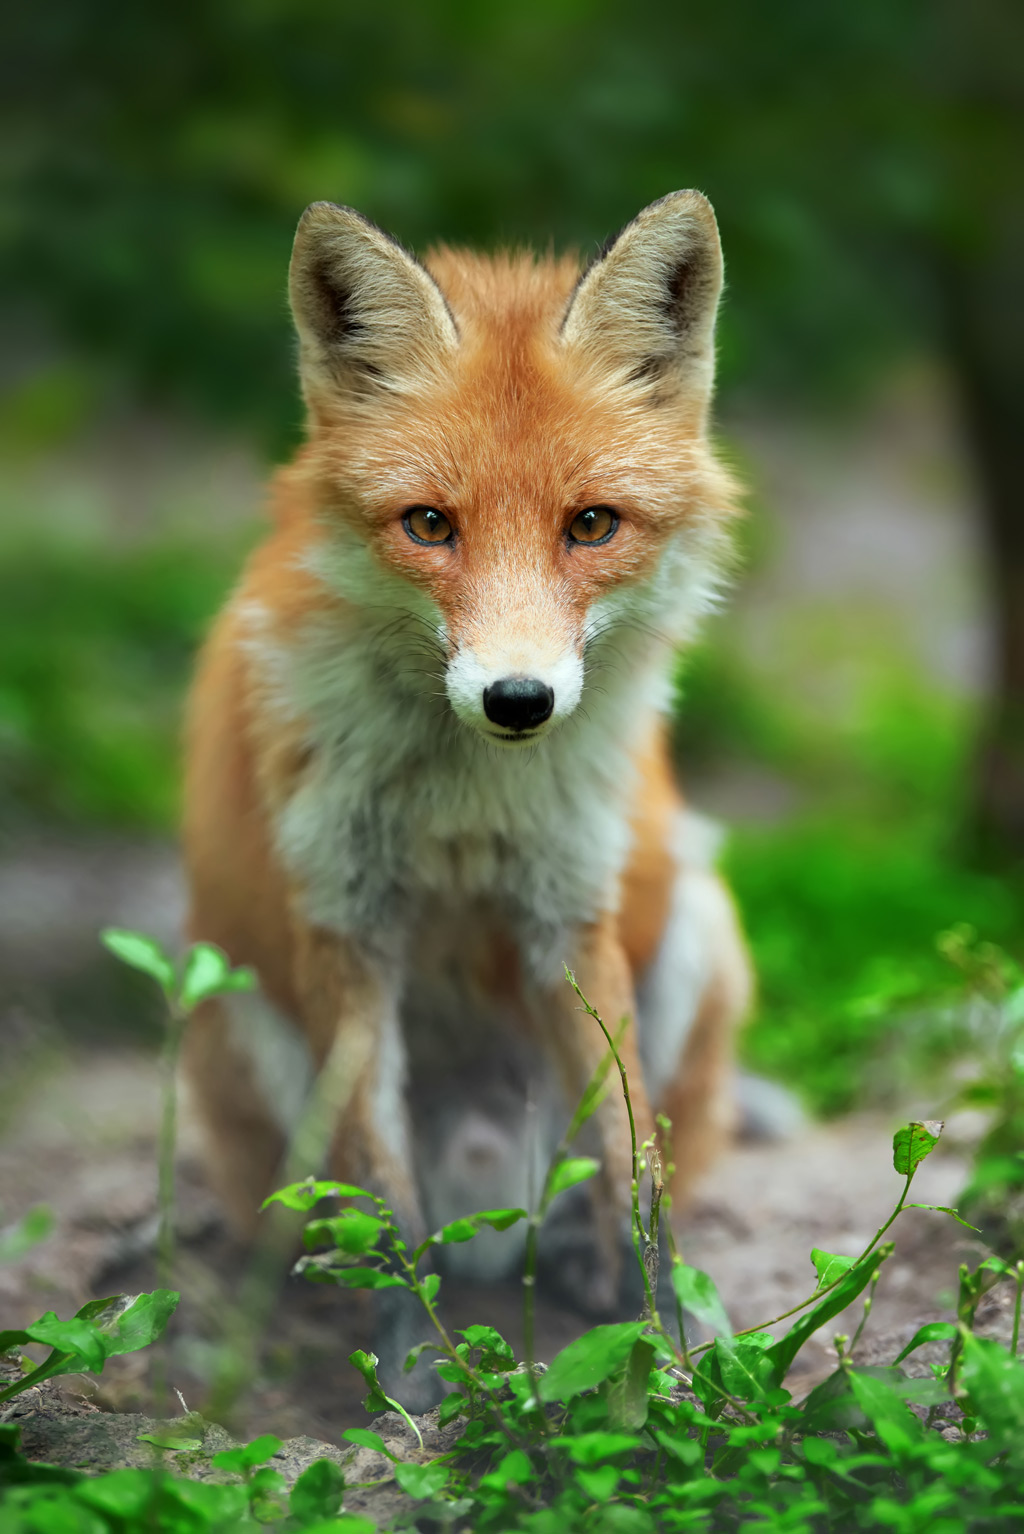 A curious red fox